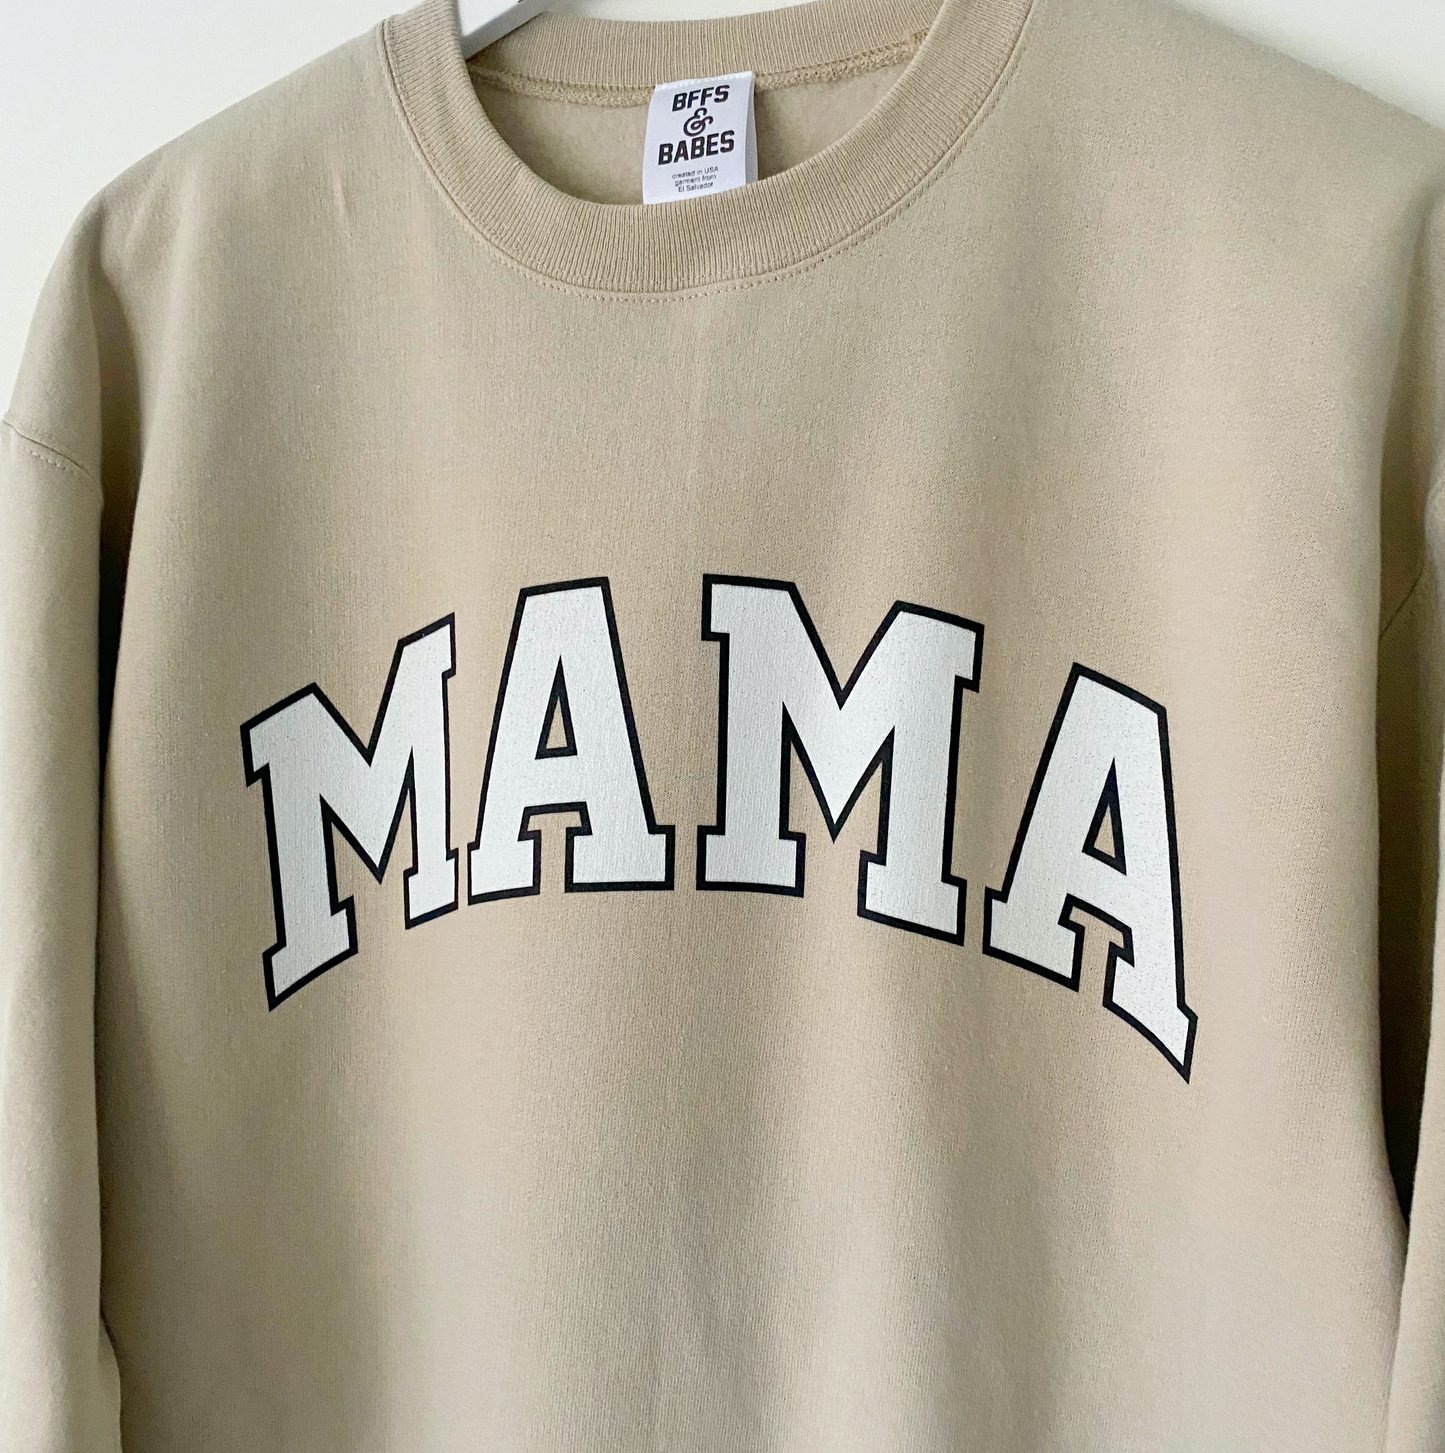 Load image into Gallery viewer, COLLEGIATE MAMA ♡ beige printed mama sweatshirt
